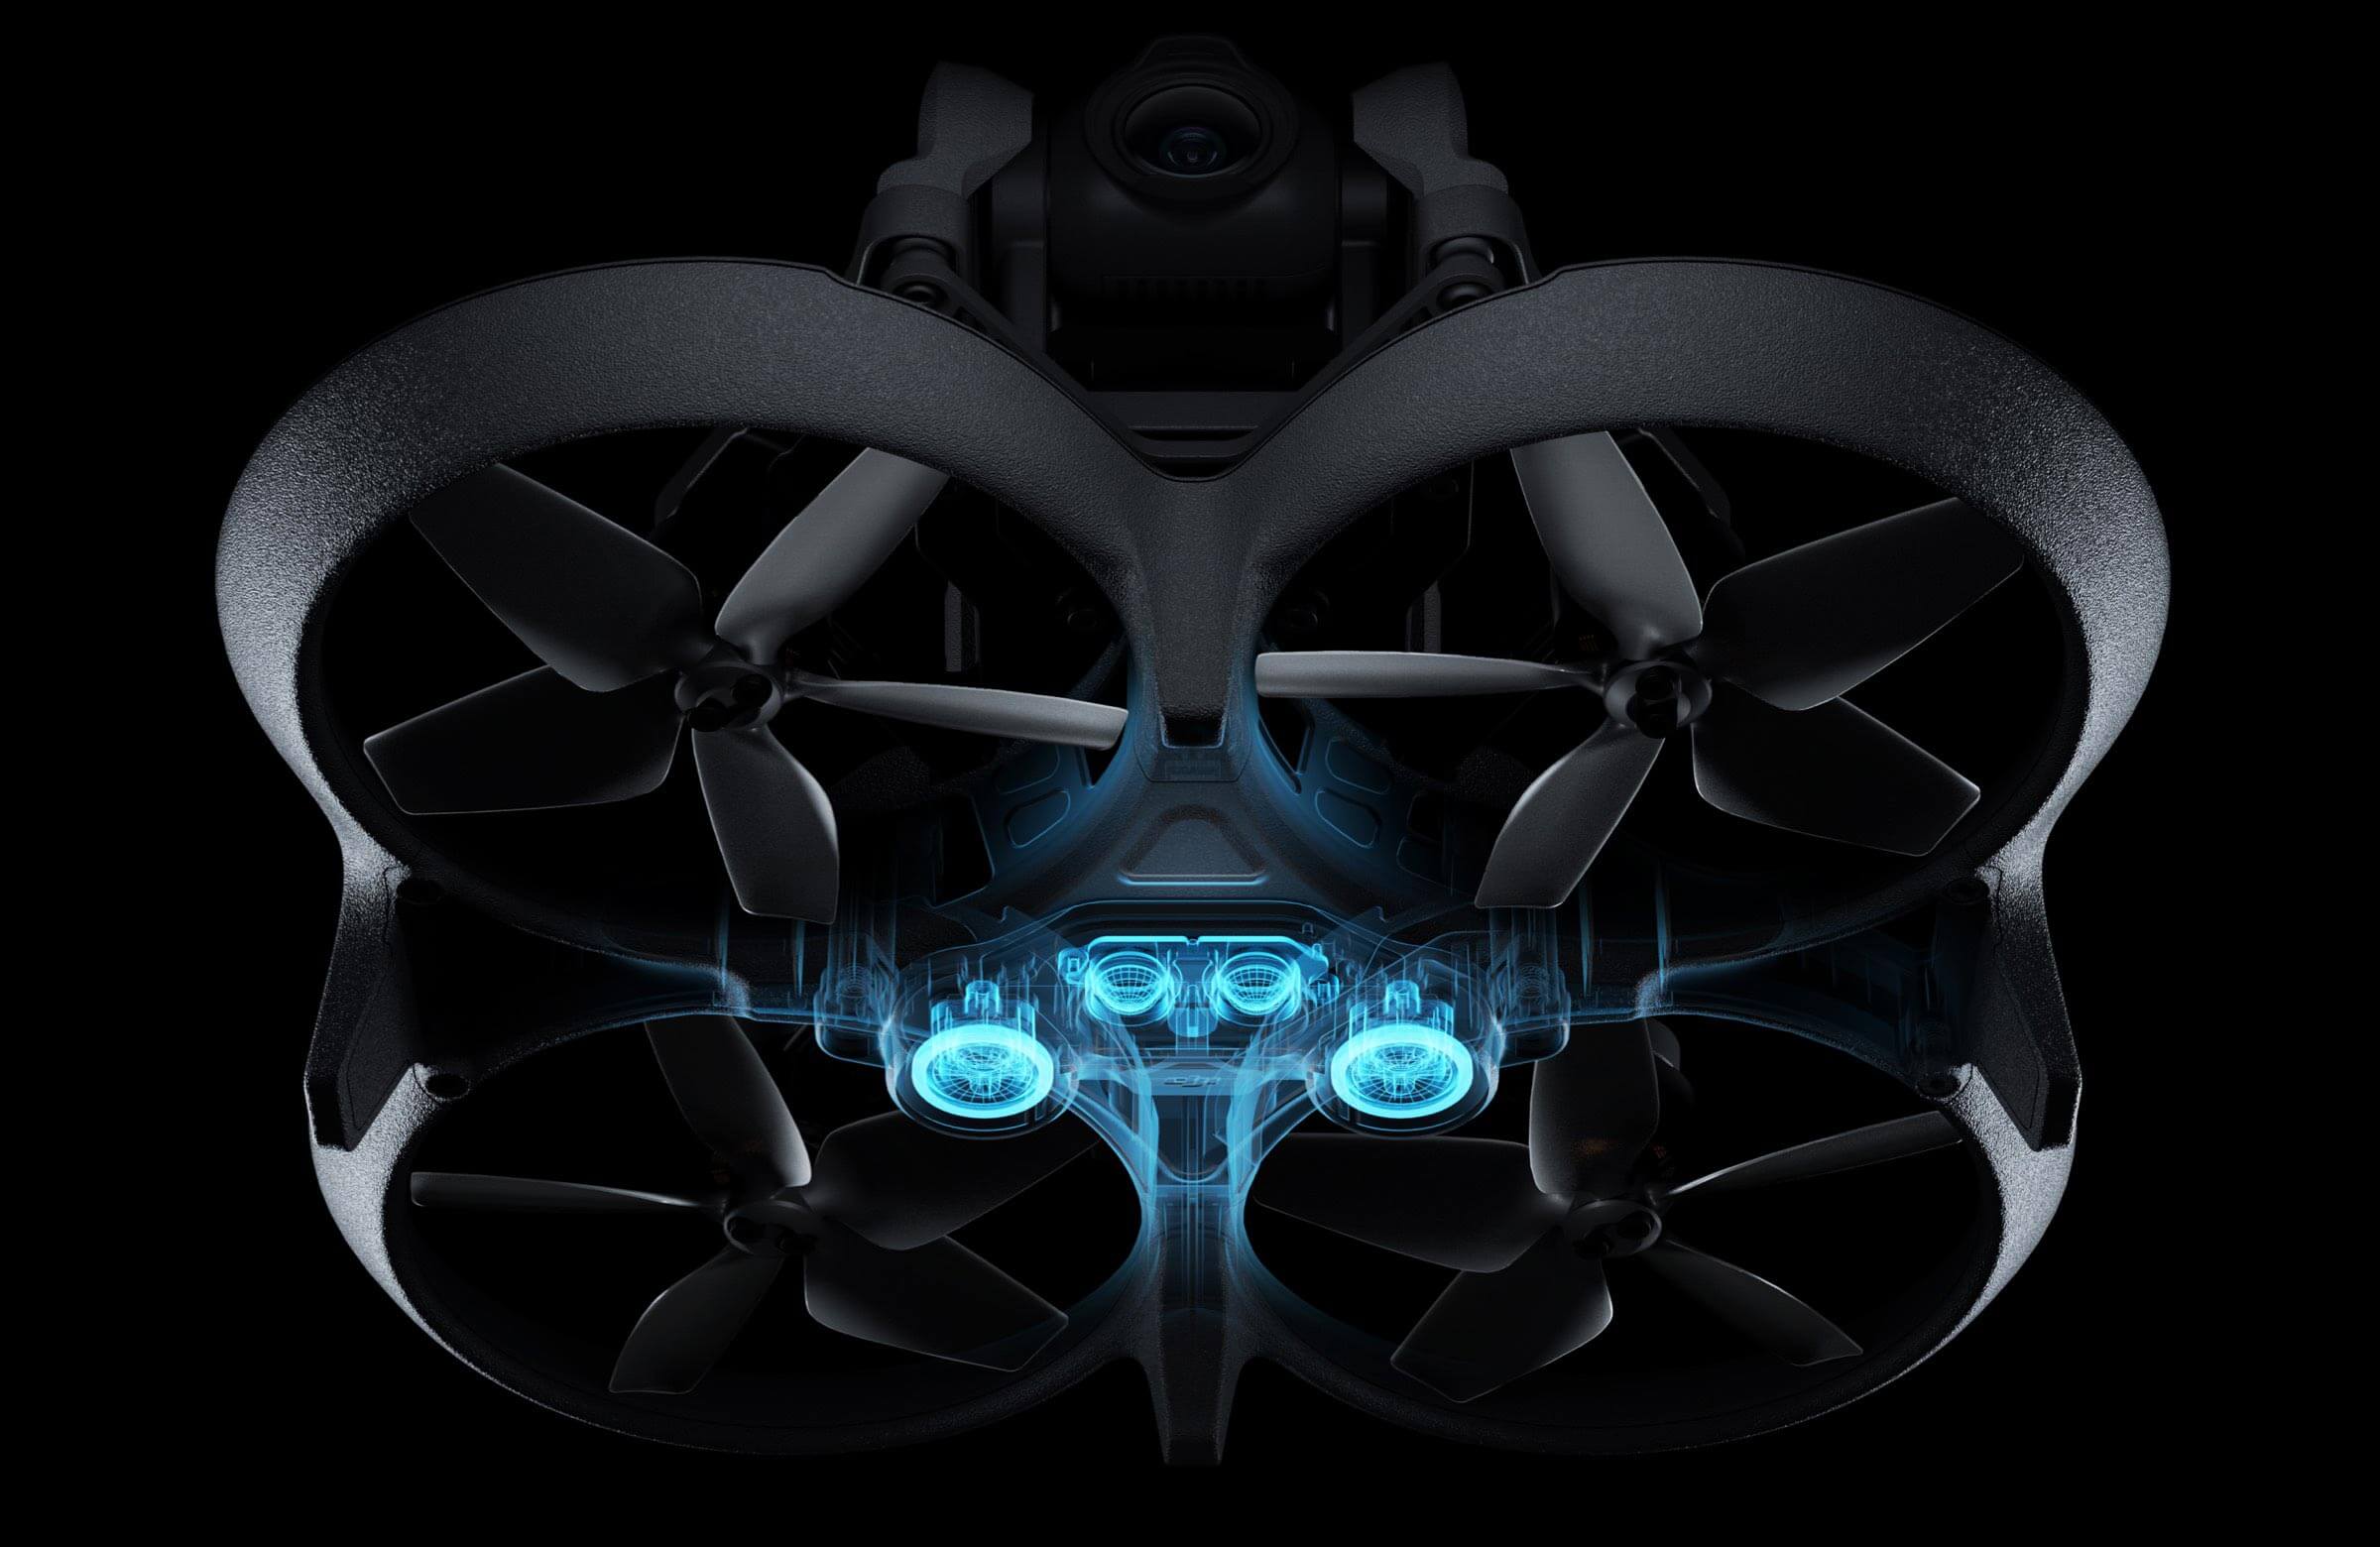 DJI Avata, built-in propeller guard, downward binocular vision and ToF infrared